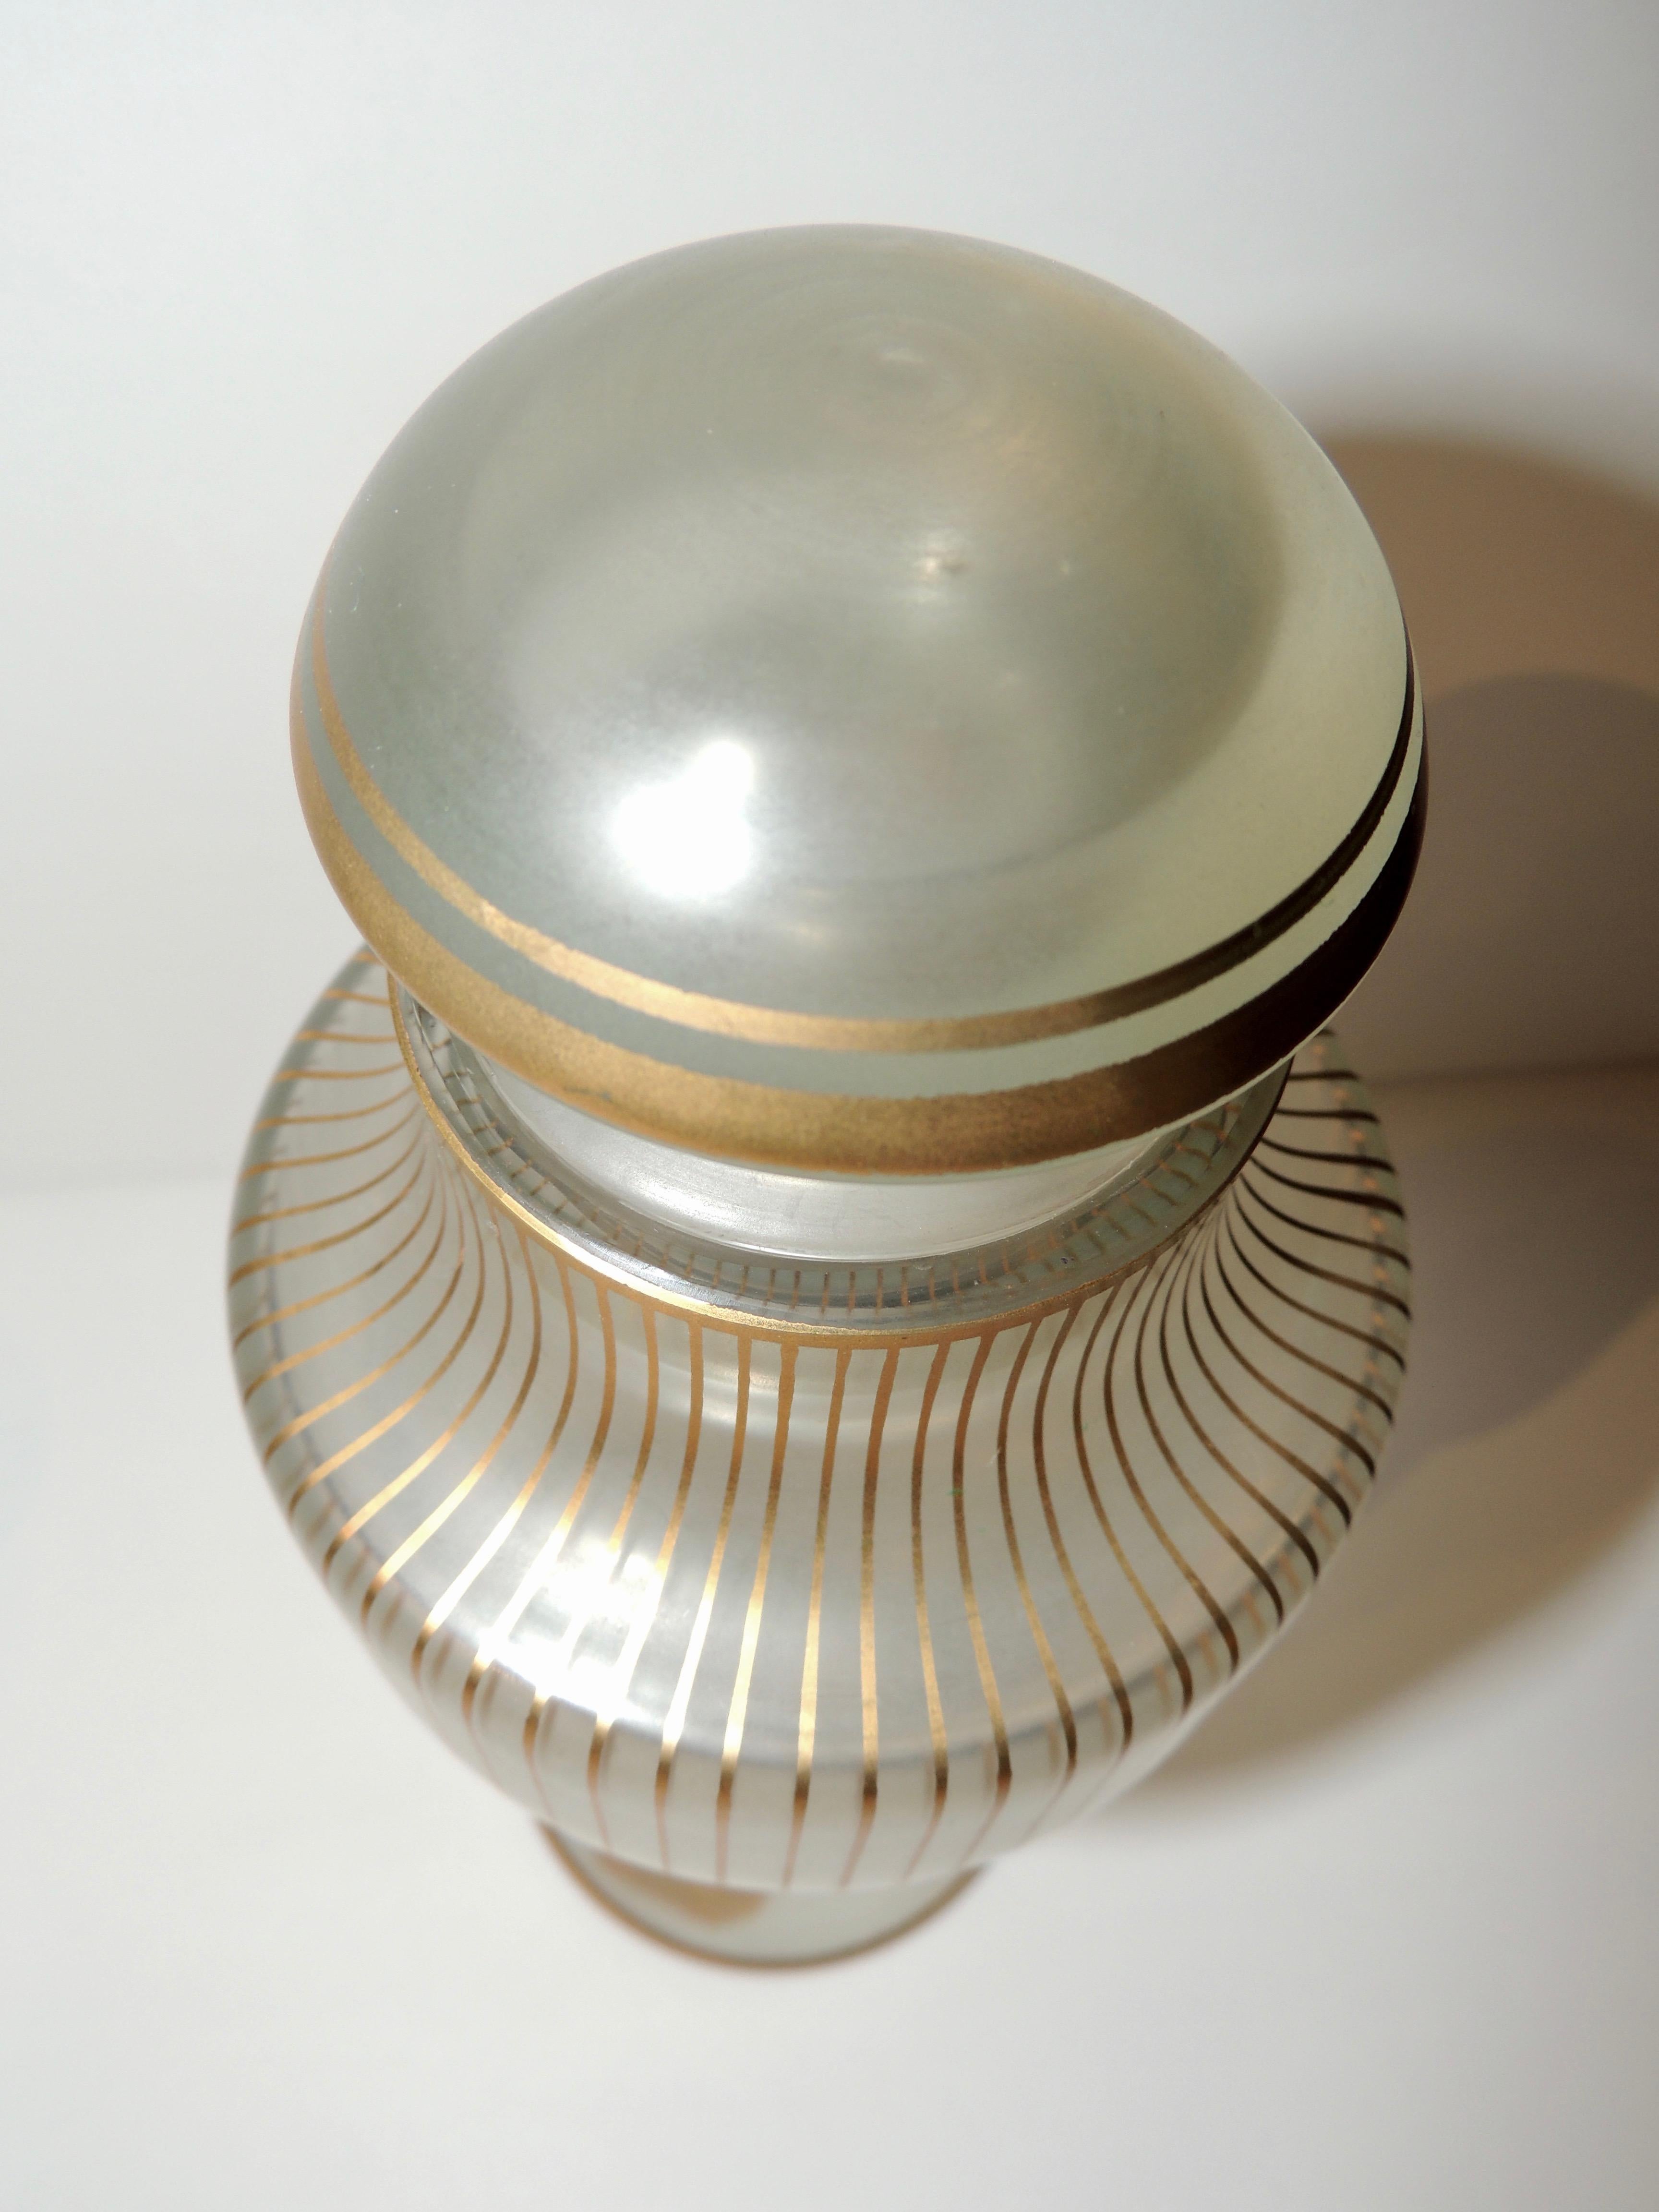 bohemia crystal decanter made in czechoslovakia